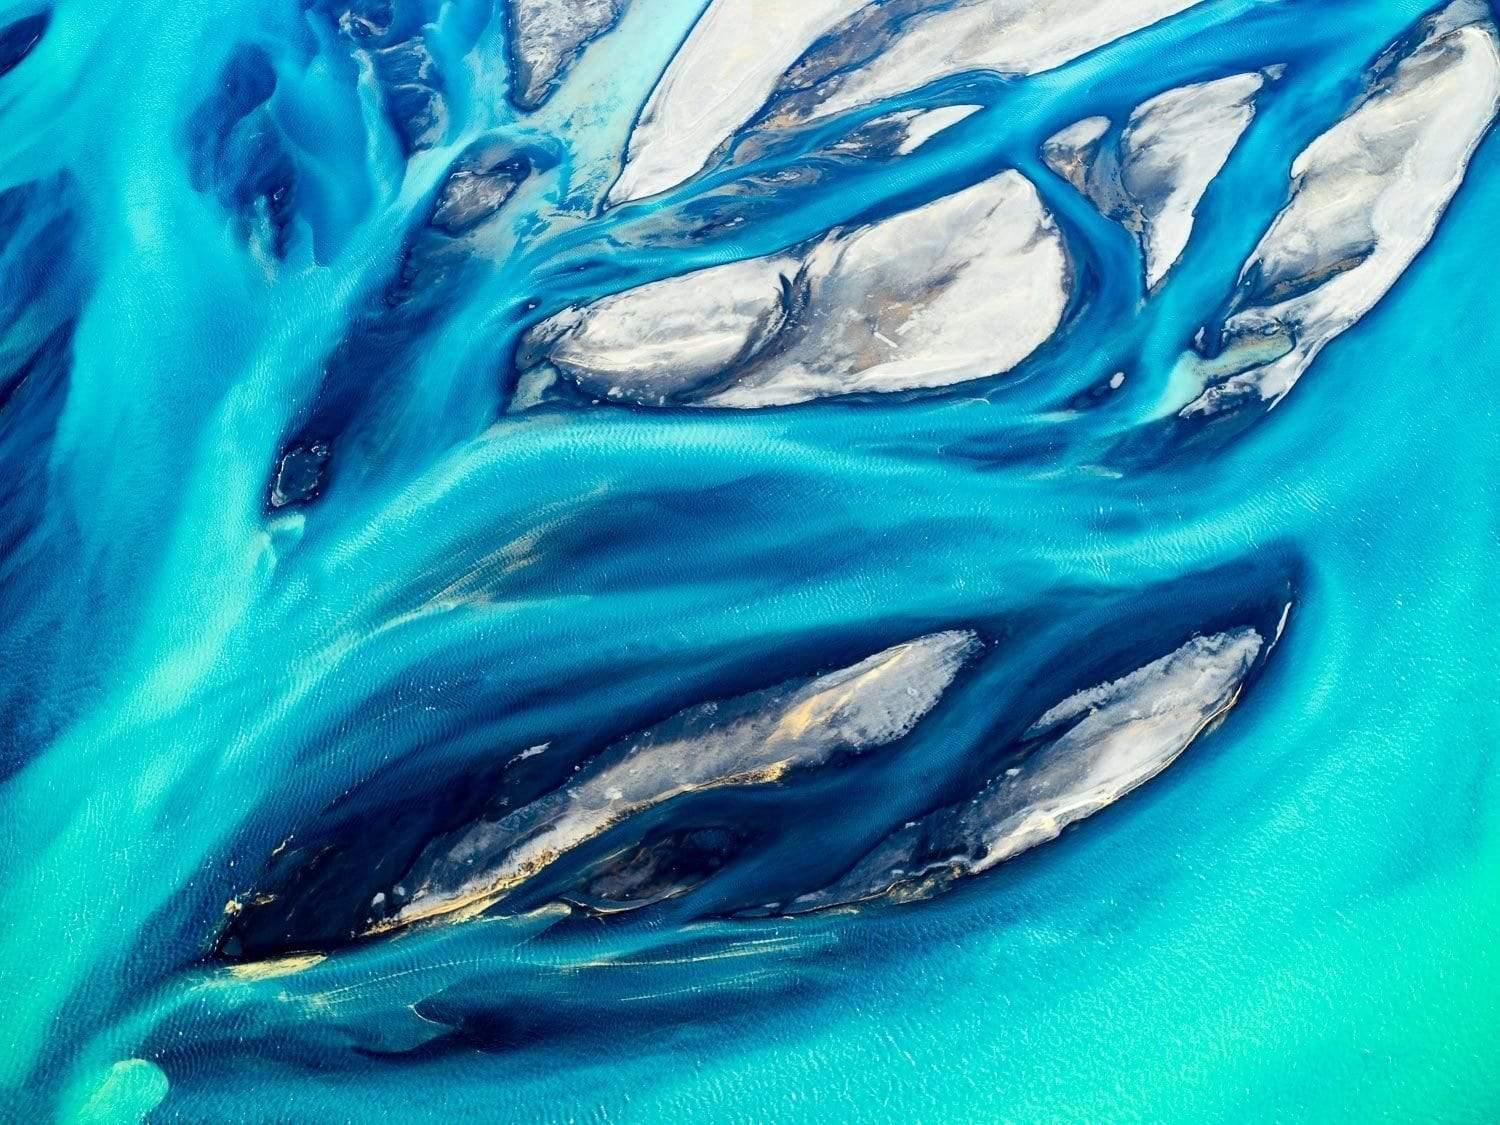 Aqua water artwork depicting a steady flow of waves of blue water, Aqua waters Iceland Art